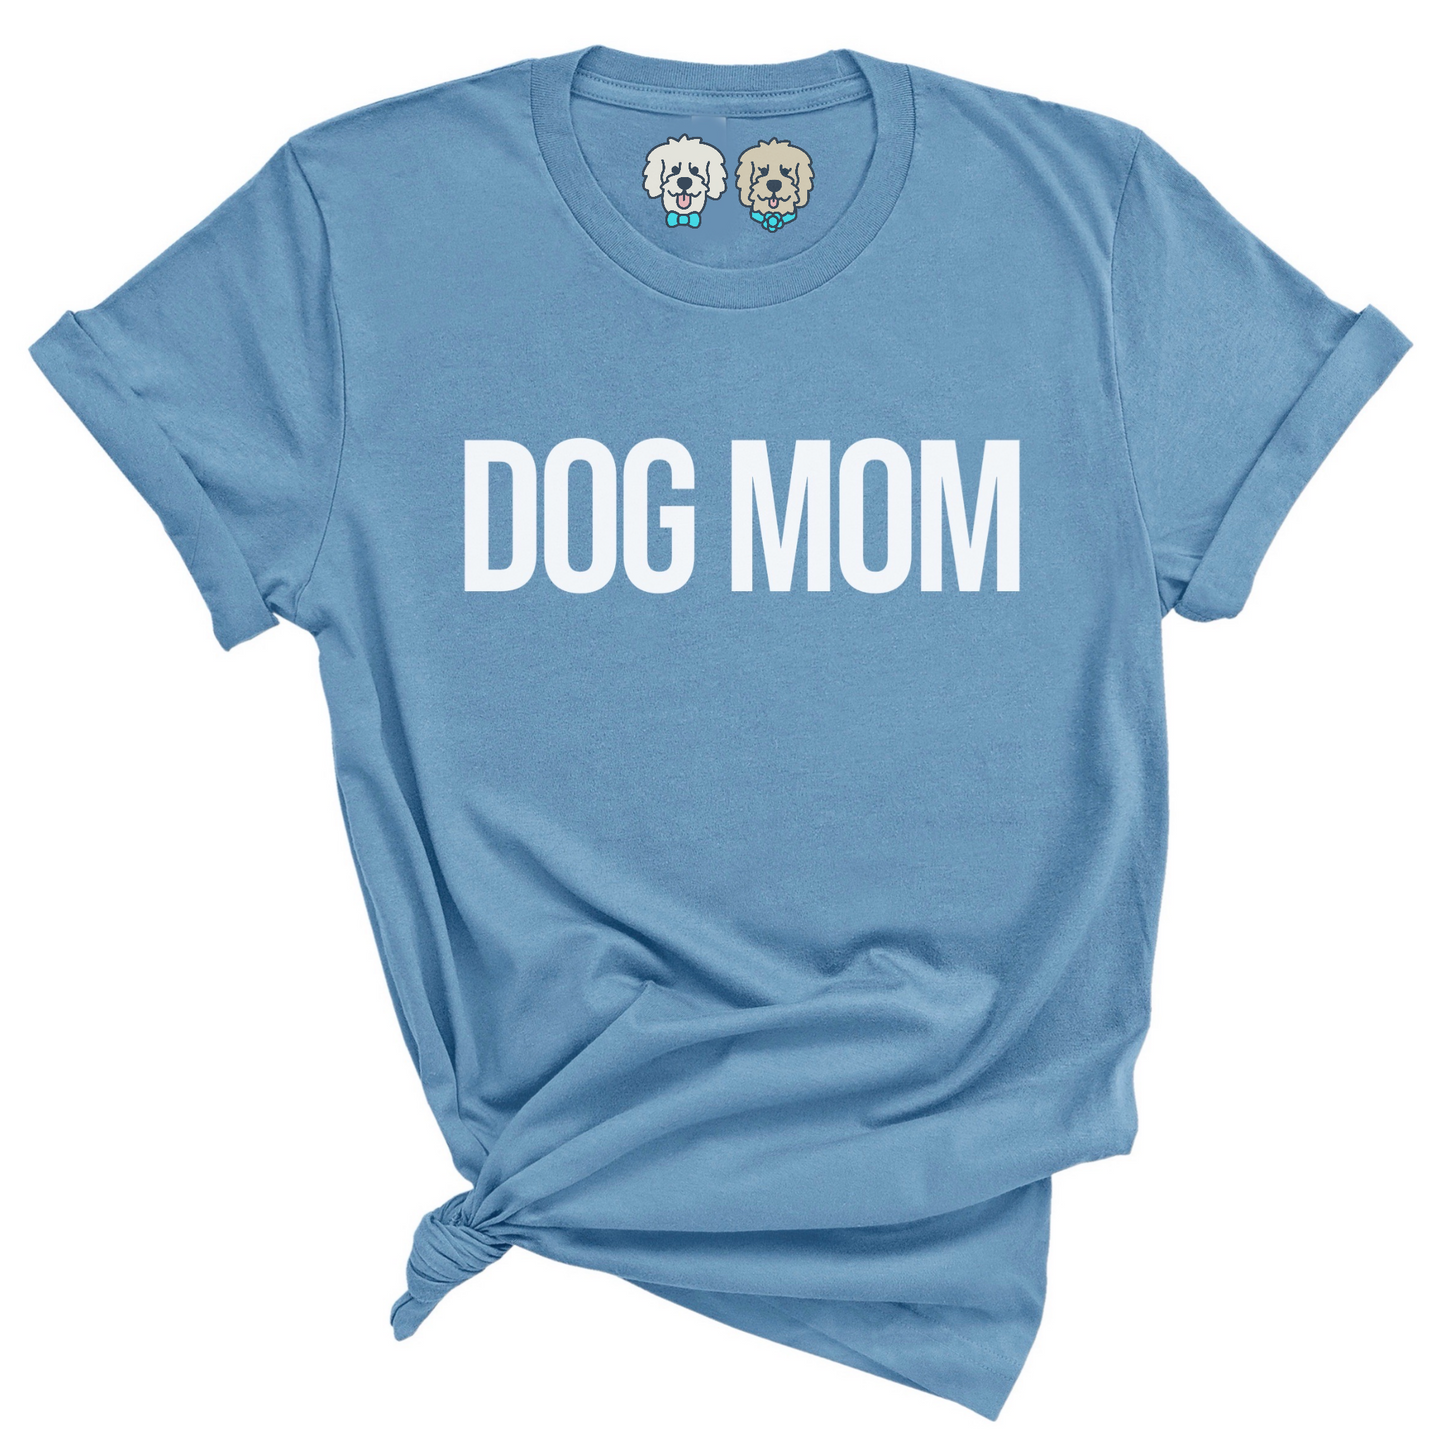 DOG MOM -  STEEL BLUE TSHIRT